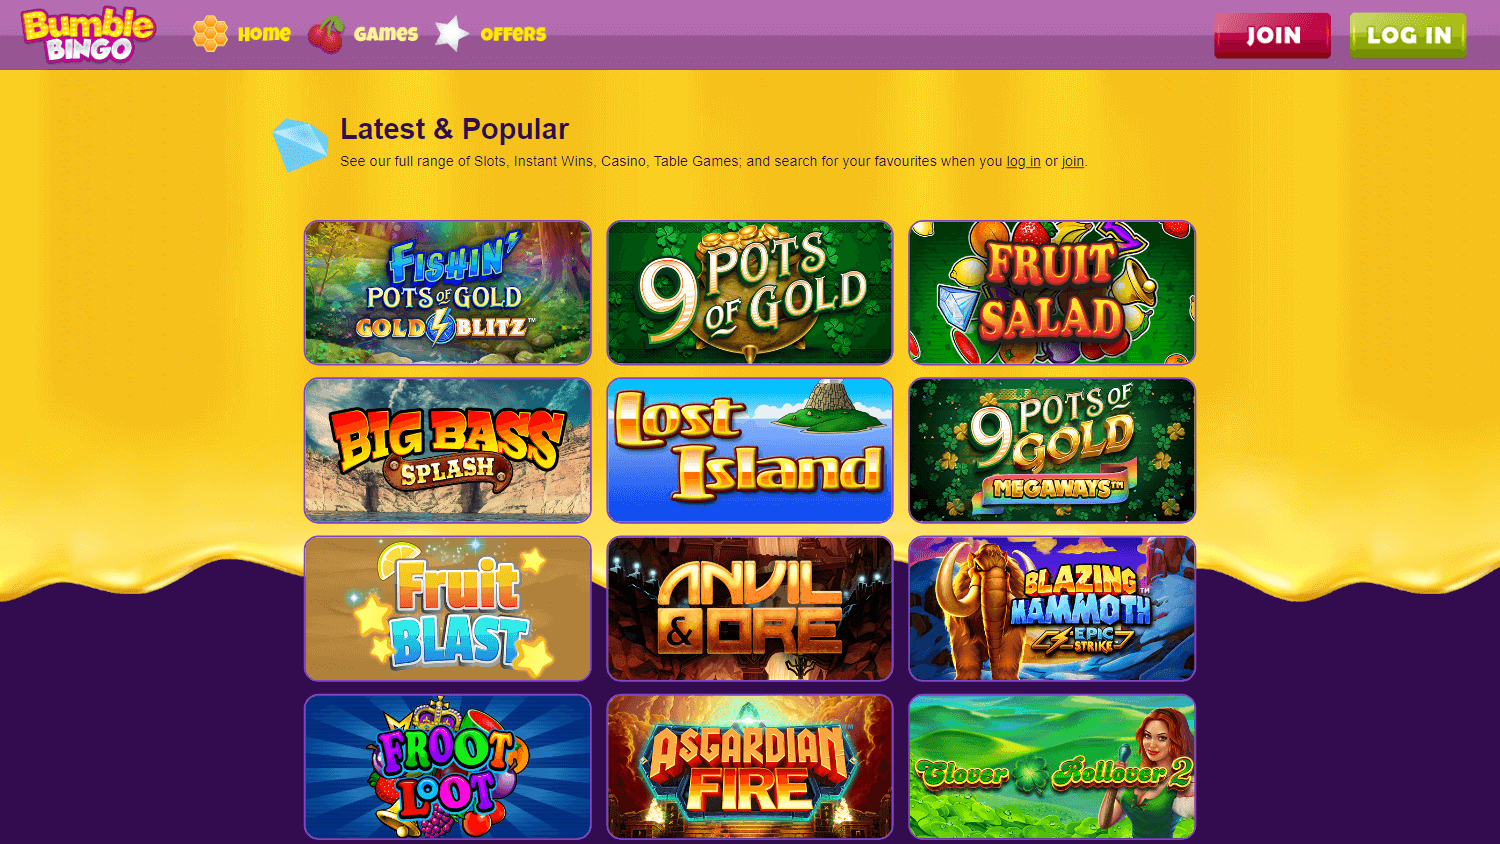 bumble_bingo_casino_game_gallery_desktop